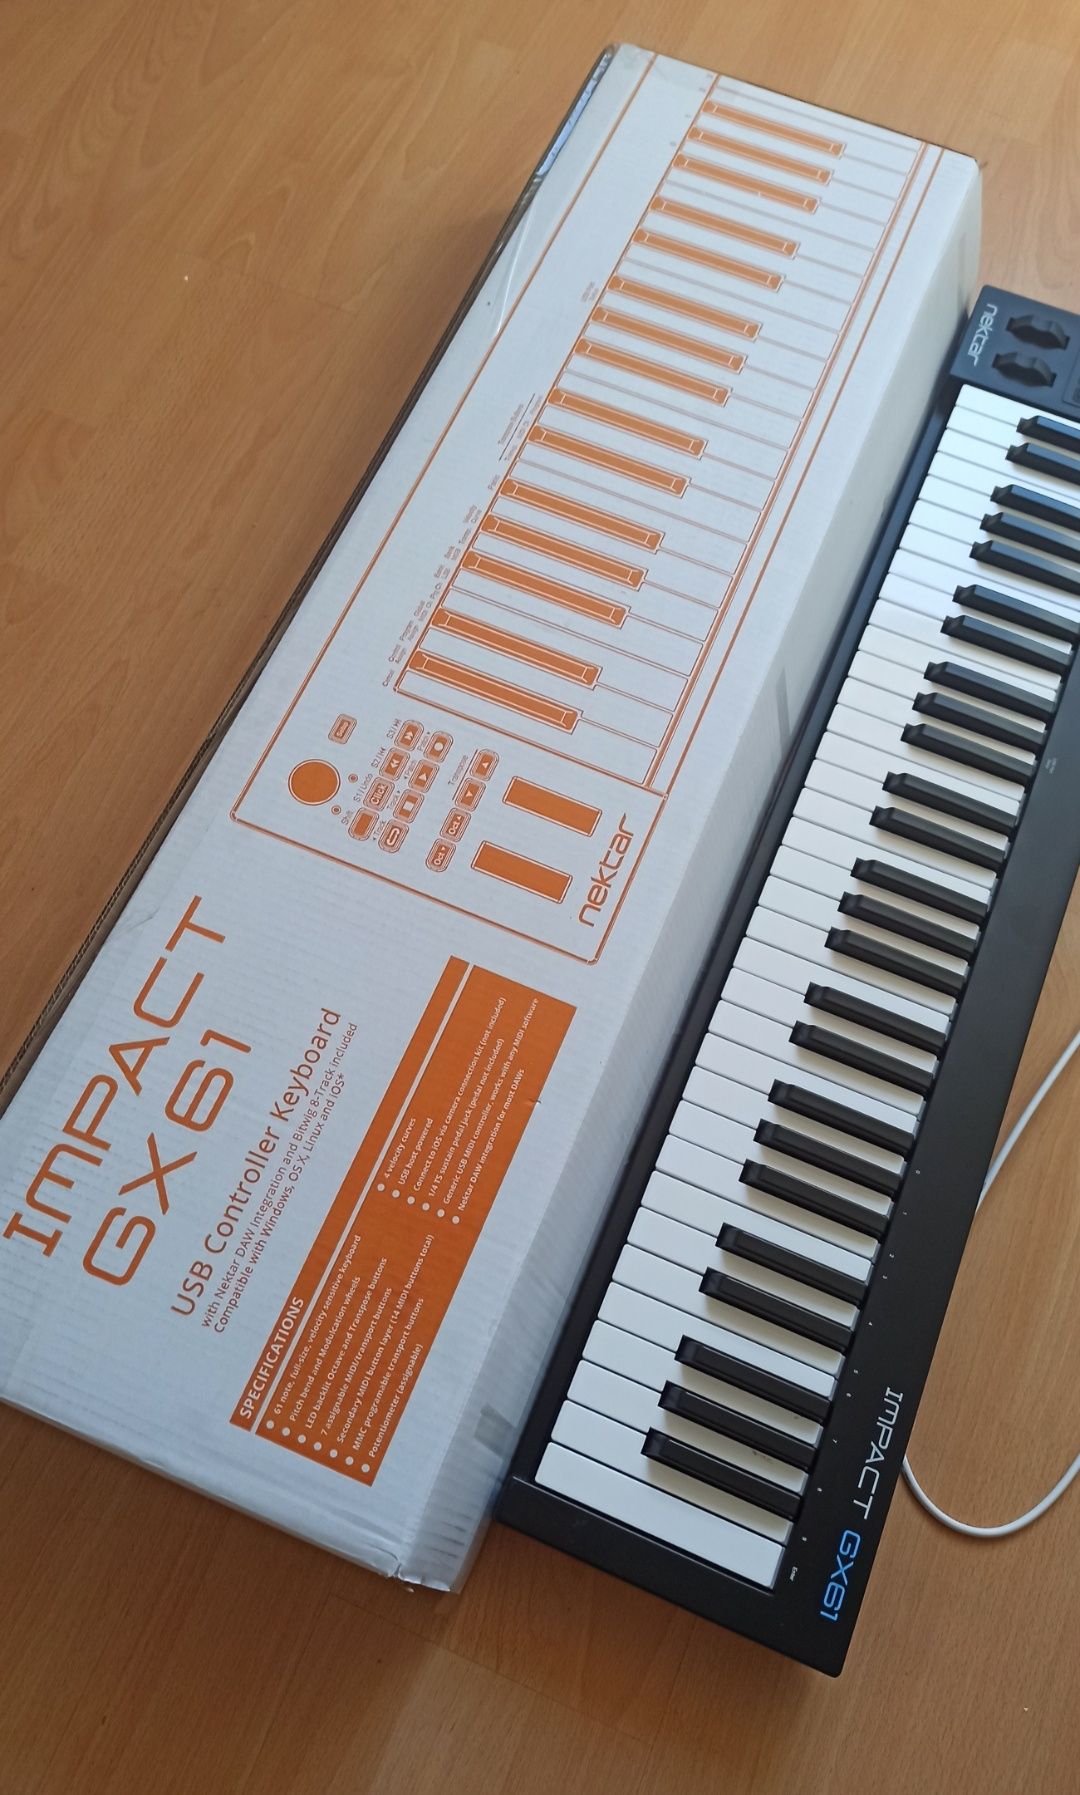 Nektar gx61 Impact Midi keyboard